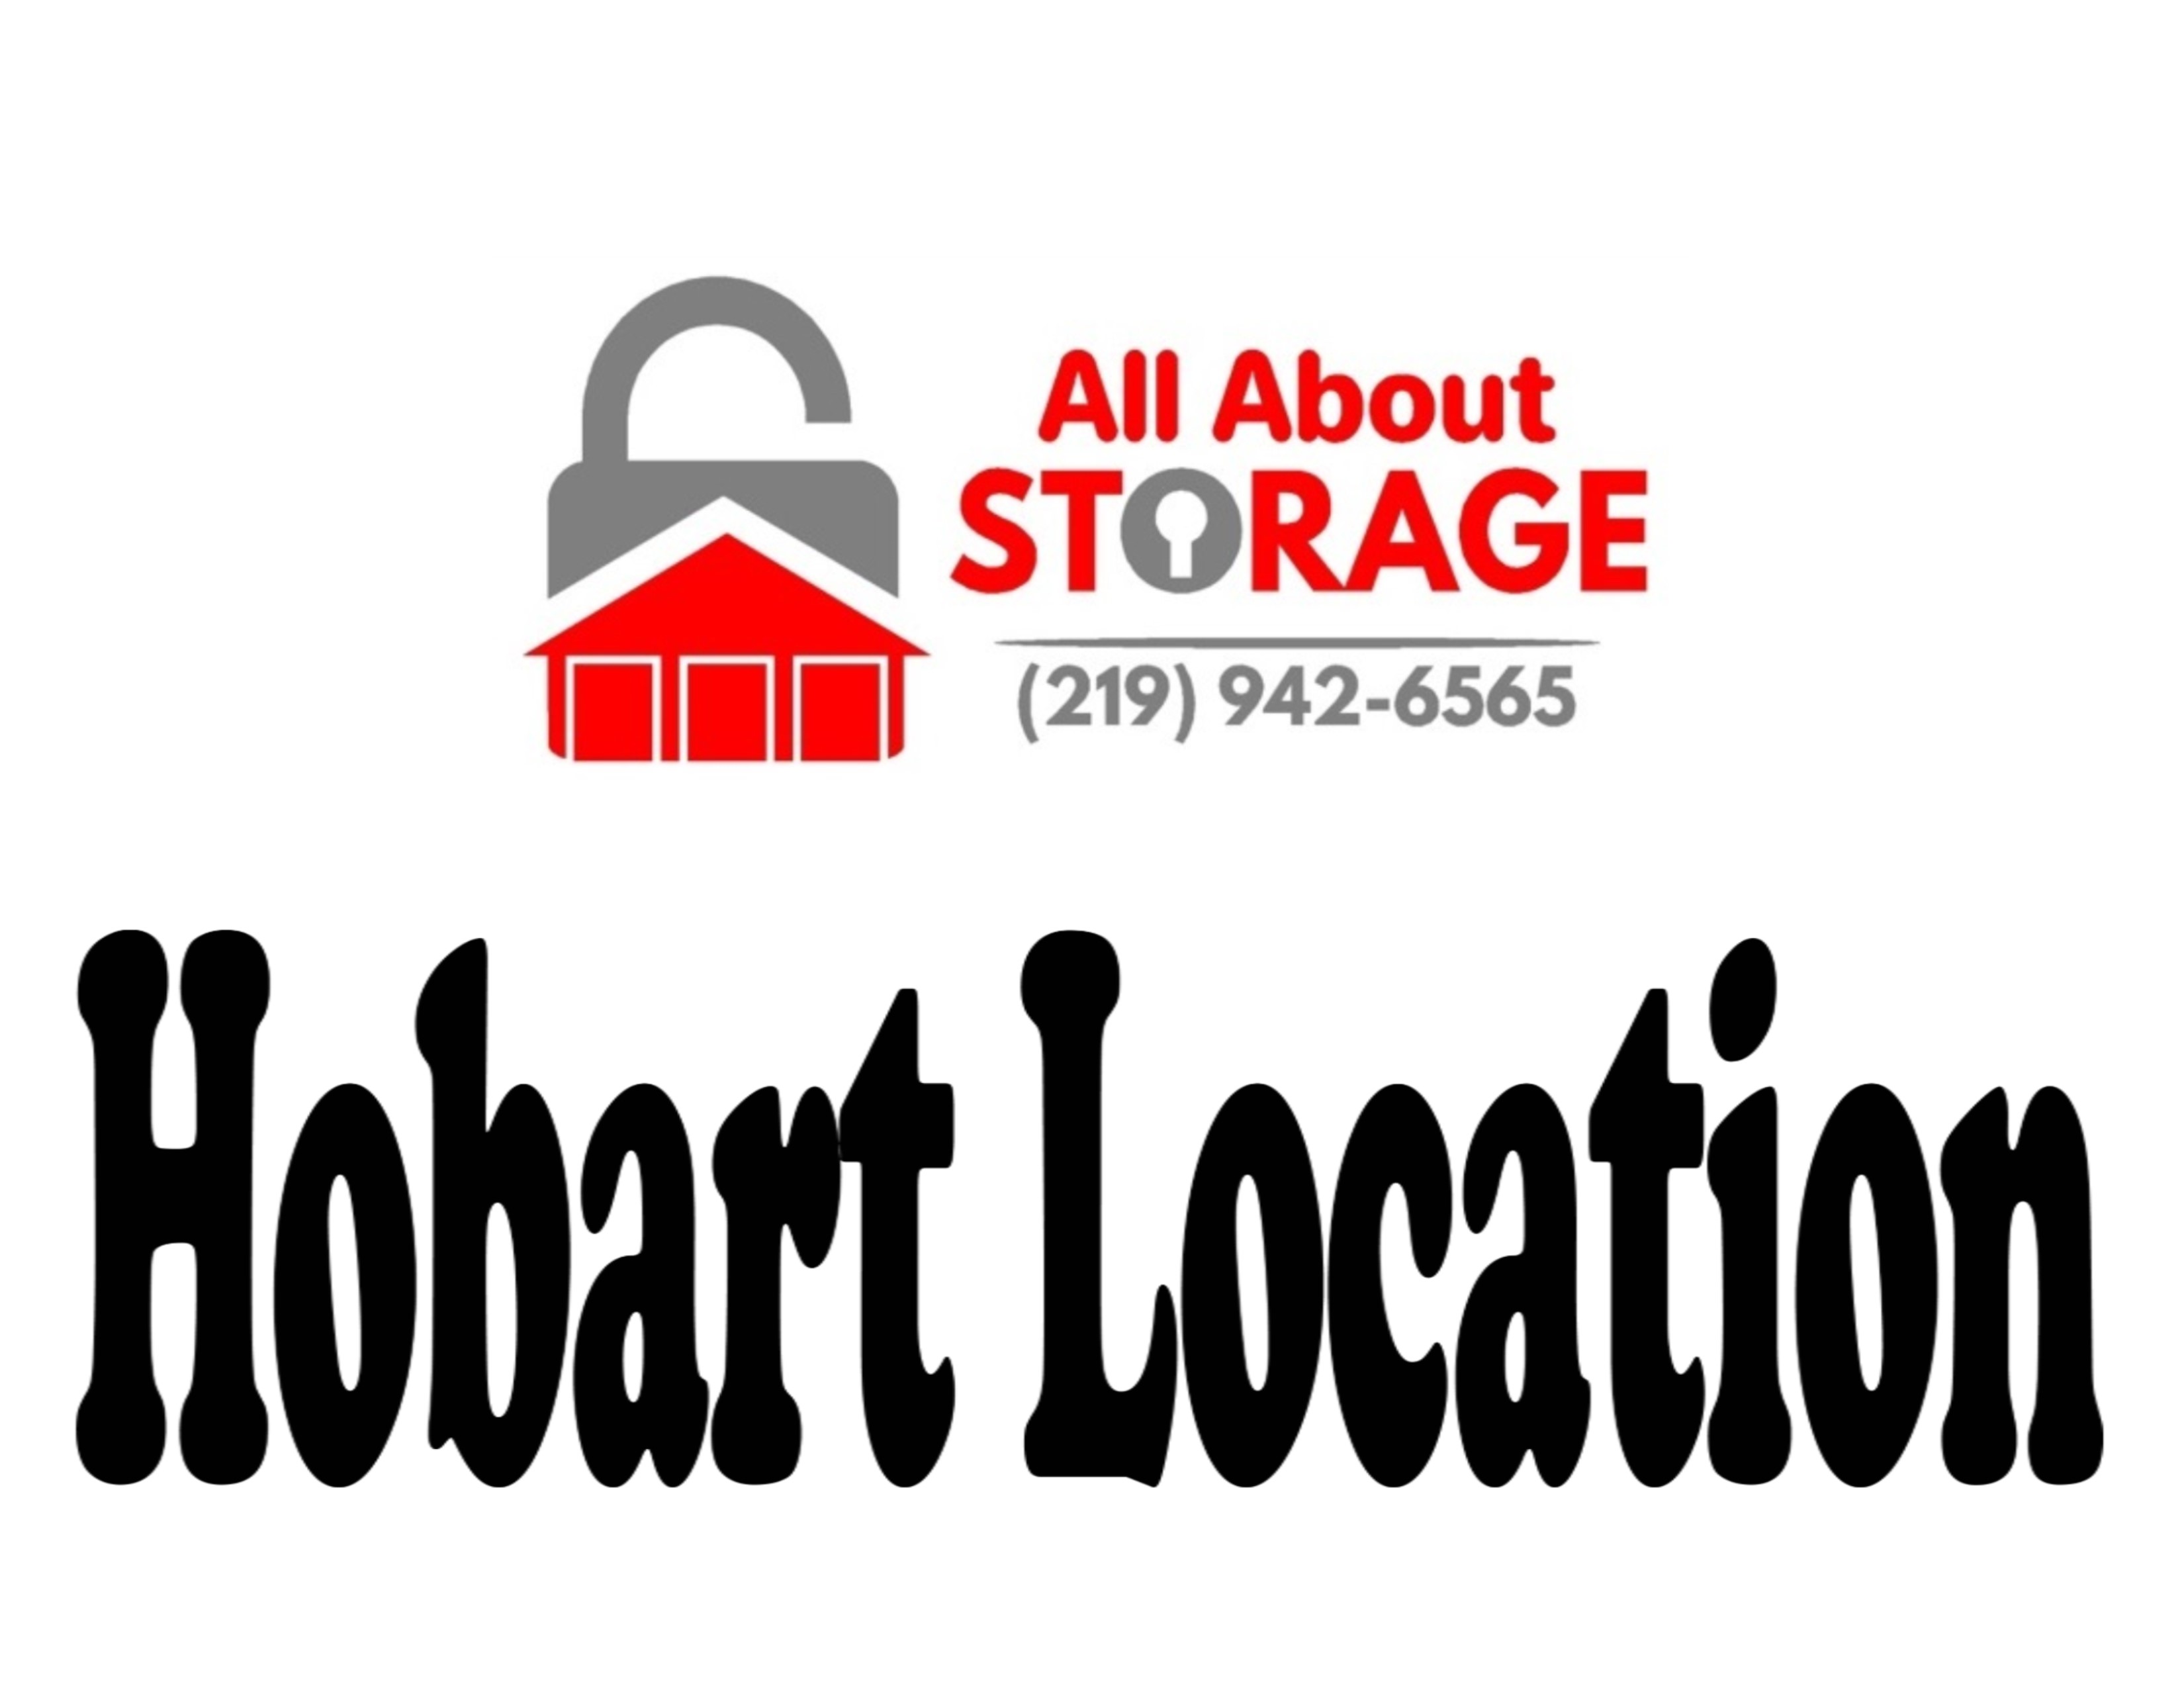 Hobart Location